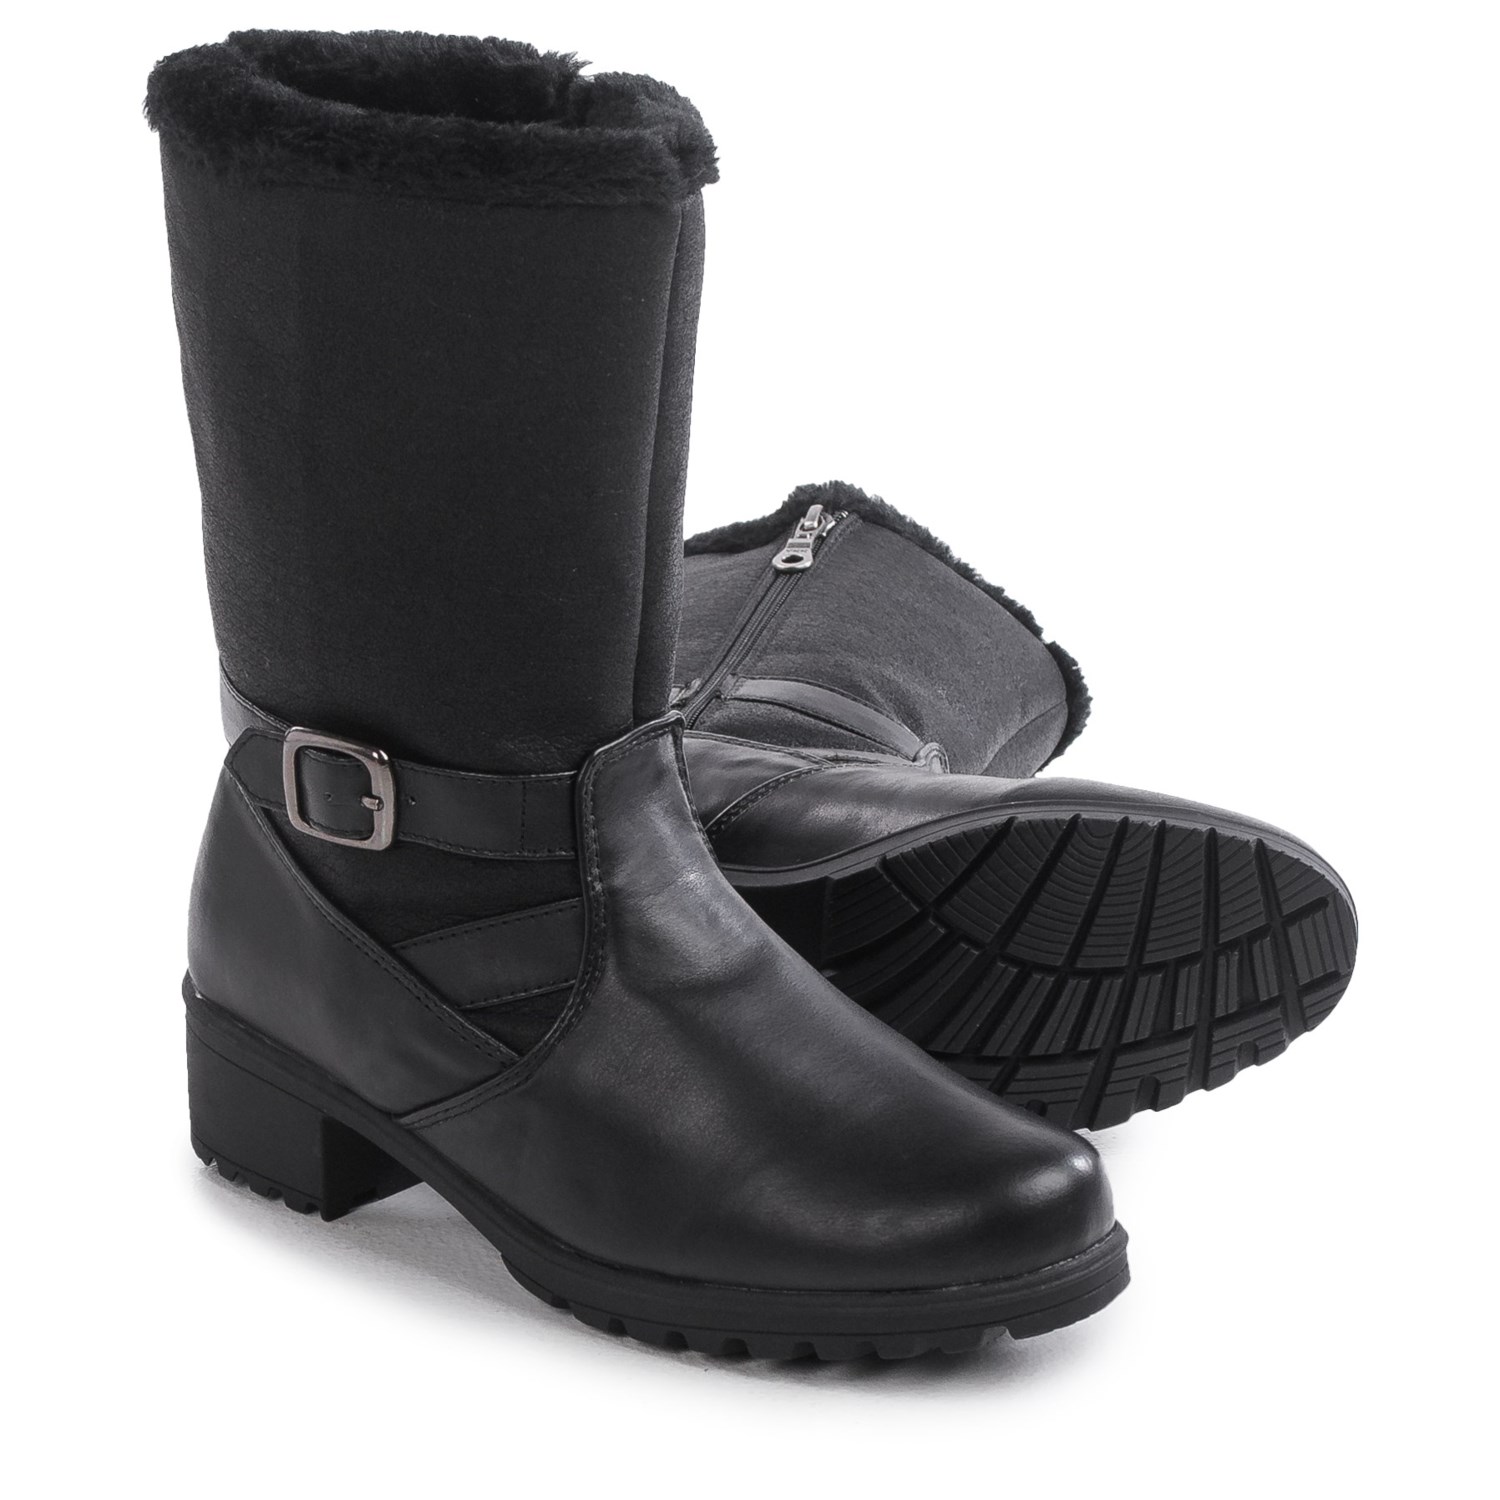 Aquatherm by Santana Canada Mardi Gras 2 Snow Boots (For Women) 138CP ...